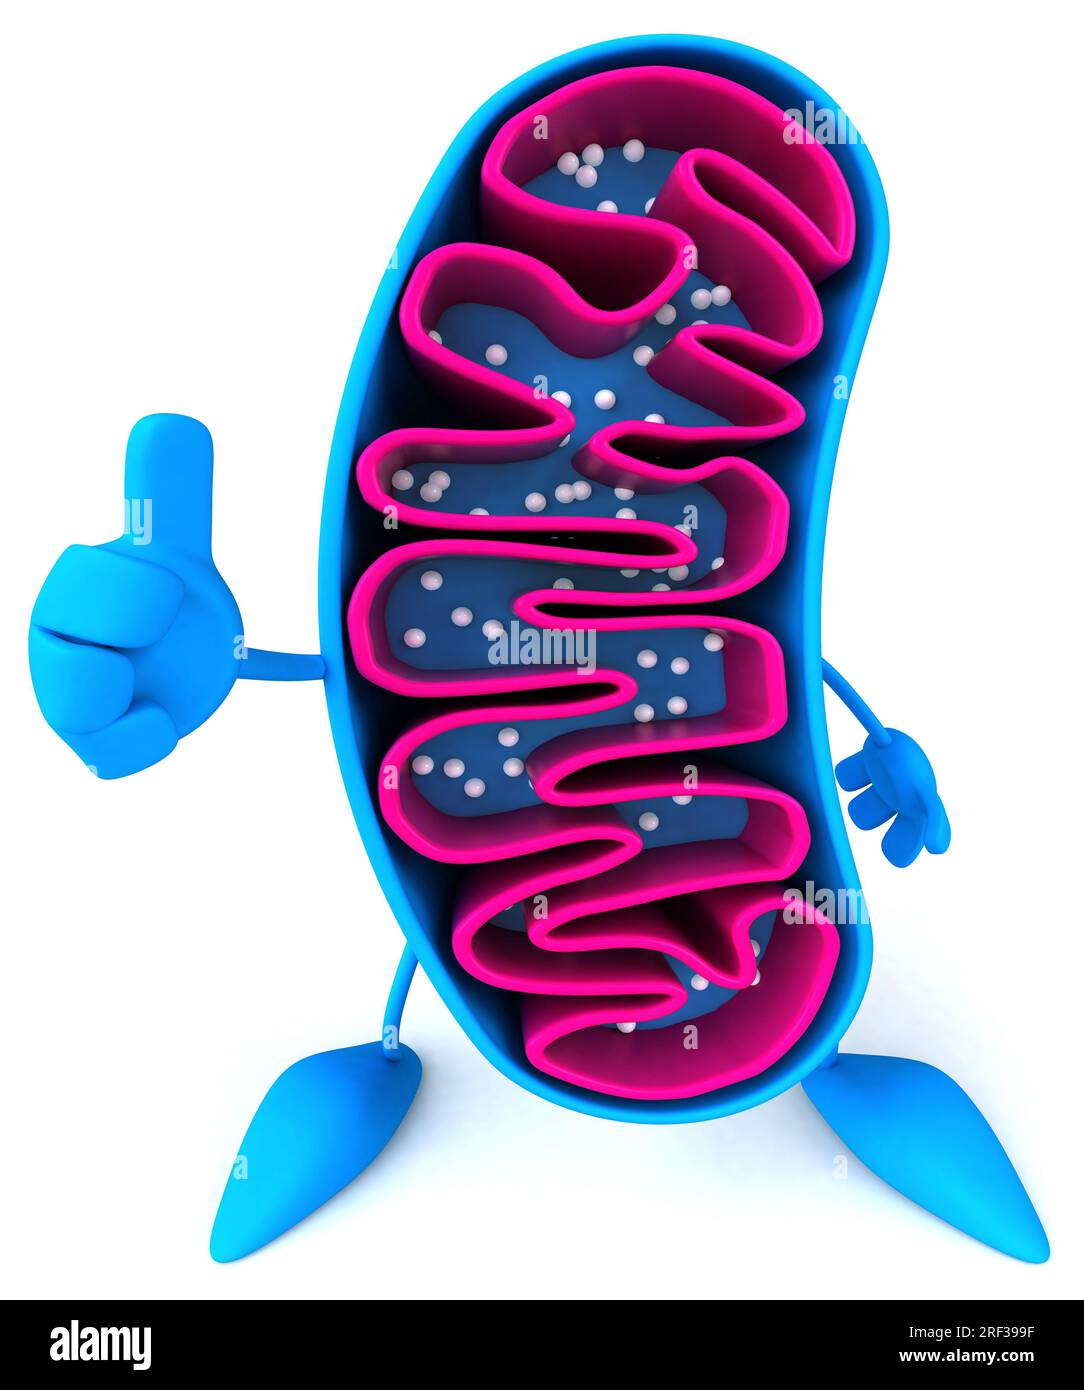 Fun 3D cartoon mitochondria character Stock Photo